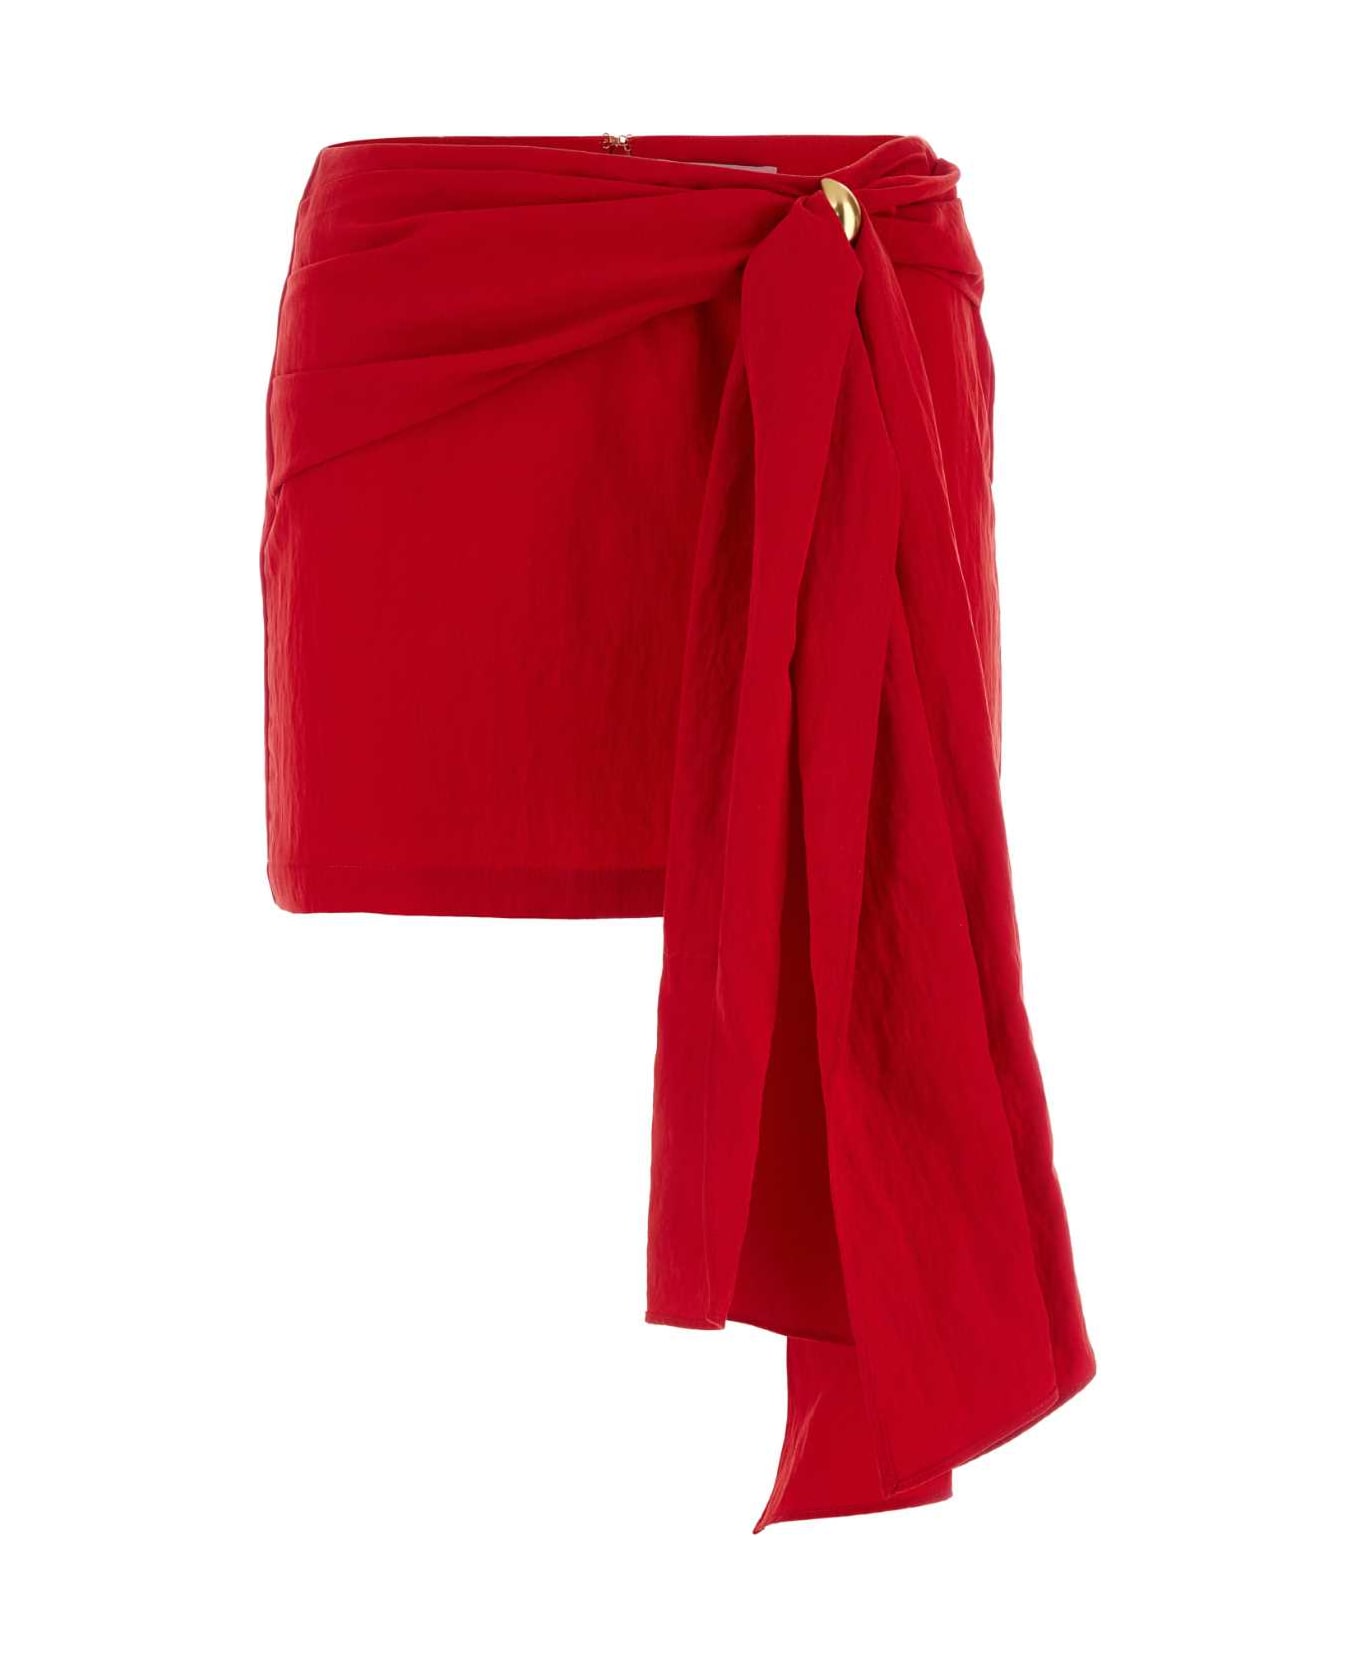 Blumarine Red Viscose Blend Mini Skirt - LIPSTICKRED